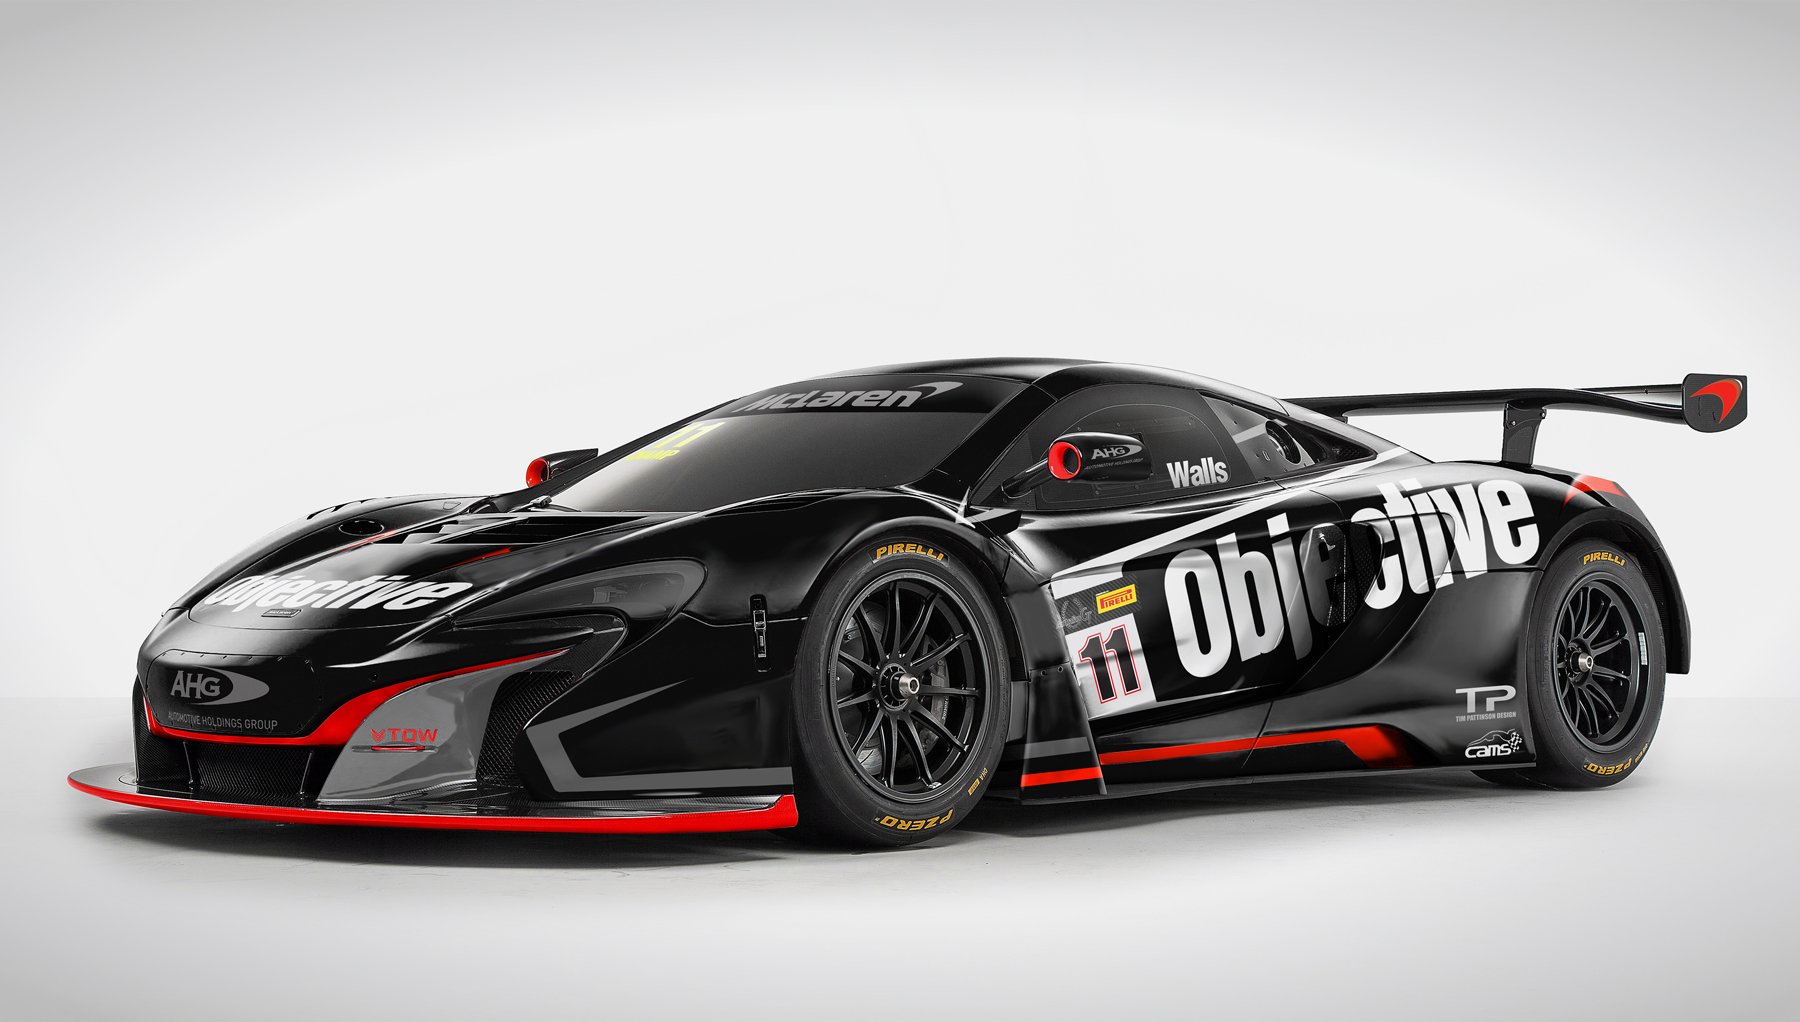 AGTP_Walls-2015-McLaren-650s-GT3_med.jpg